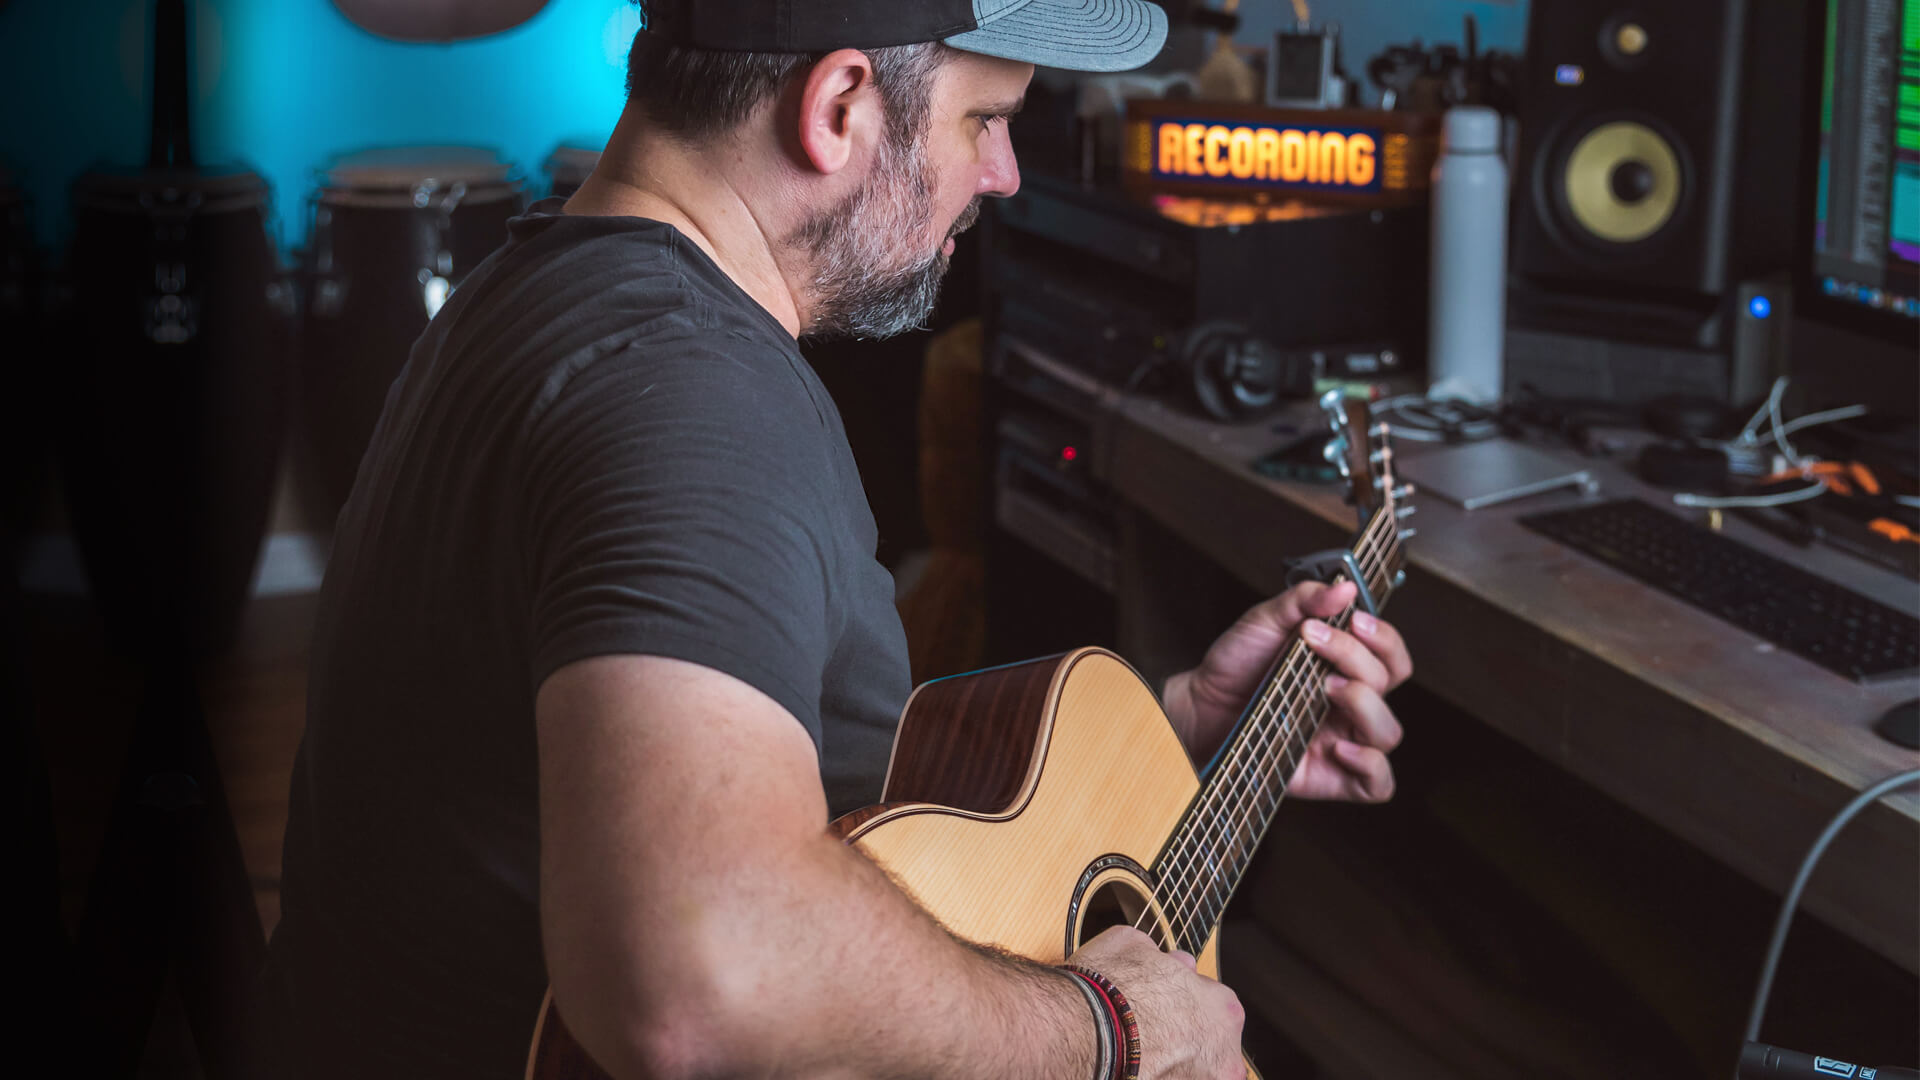 Gabriel O'Brien plays his Taylor guitar at his home recording studio